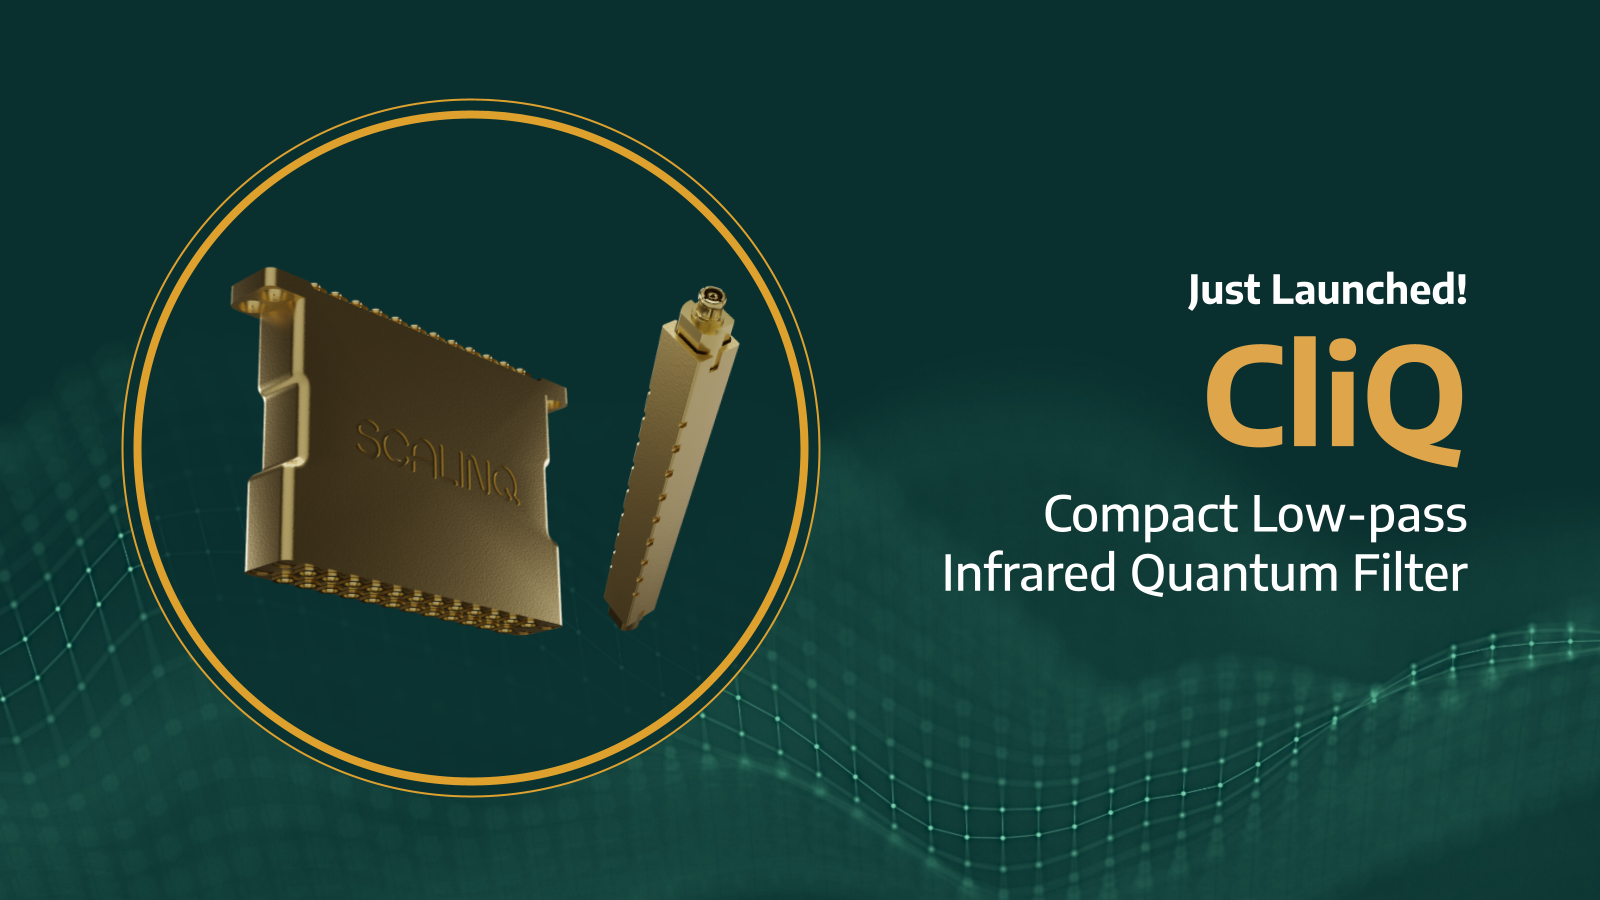 CliQ – Compact Lowpass Infrared Quantum Filter